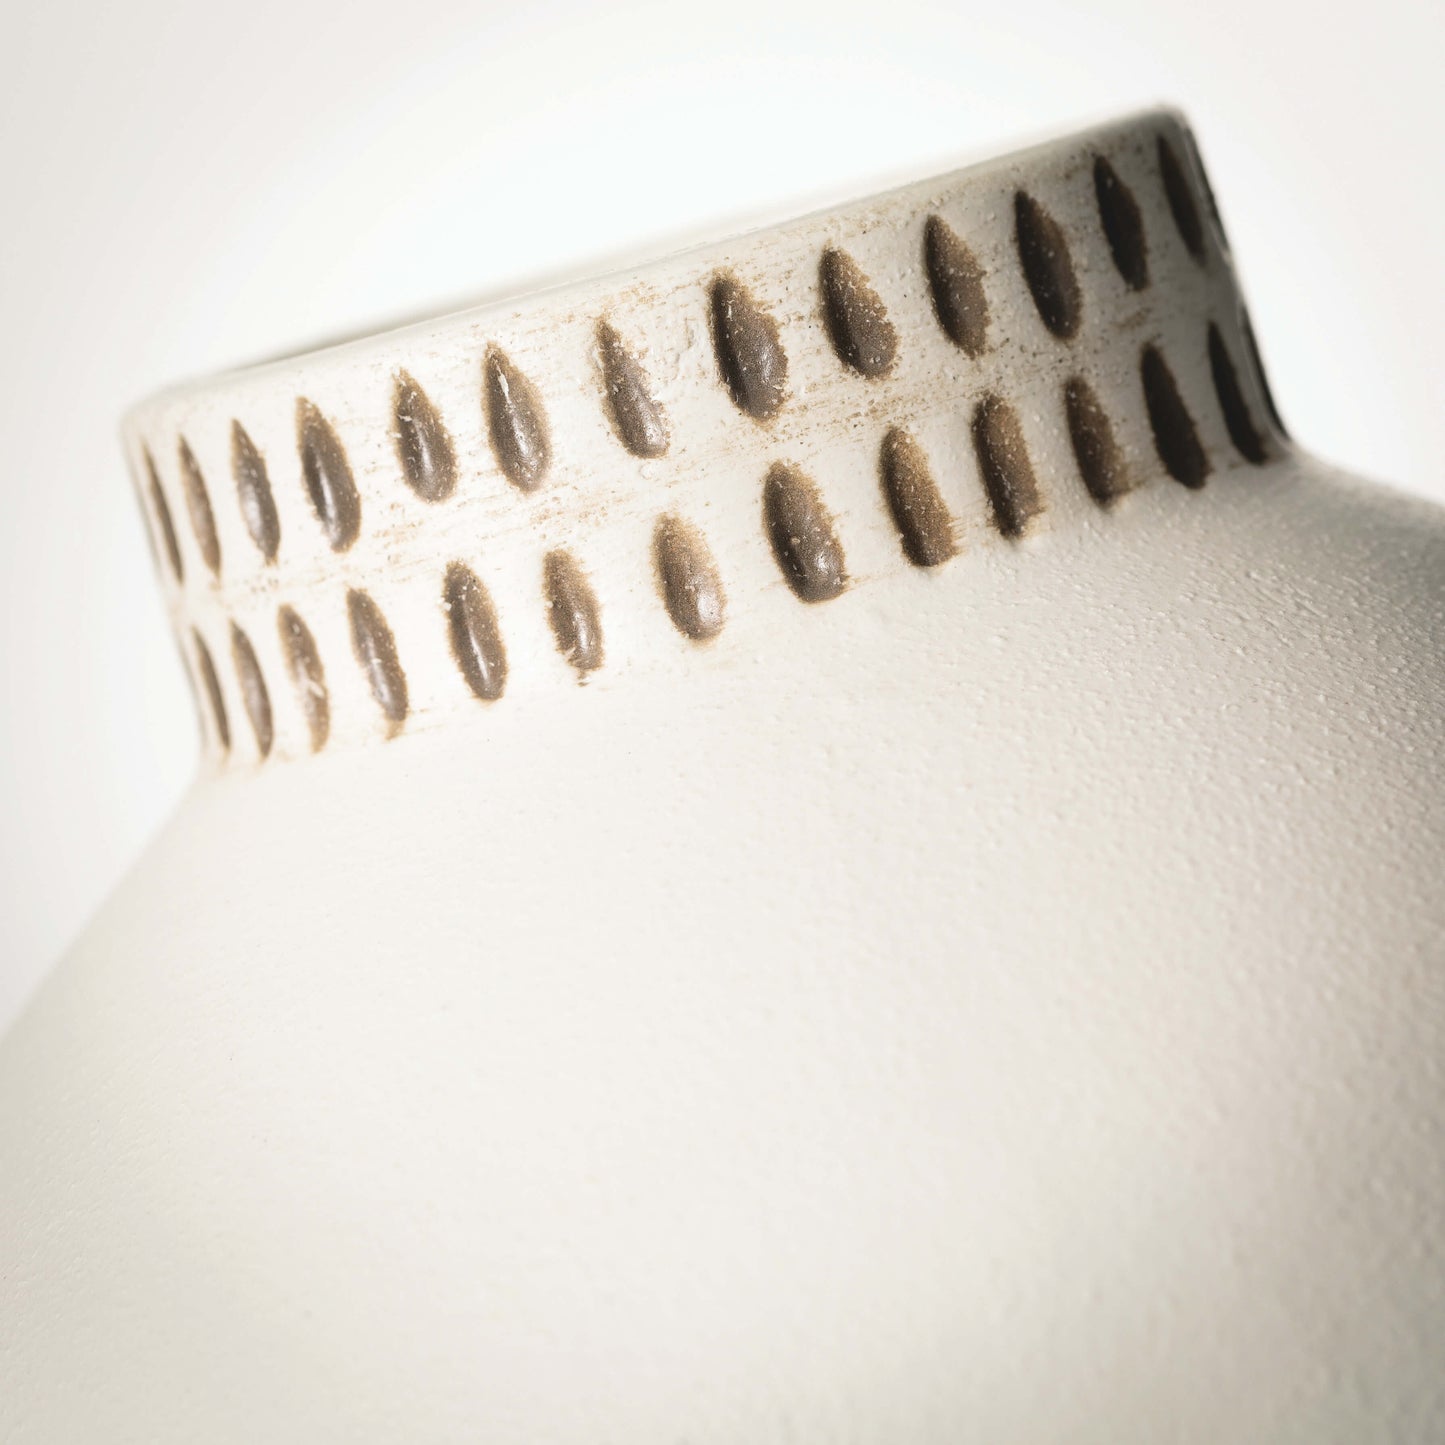 Etched Ivory Ceramic Vase